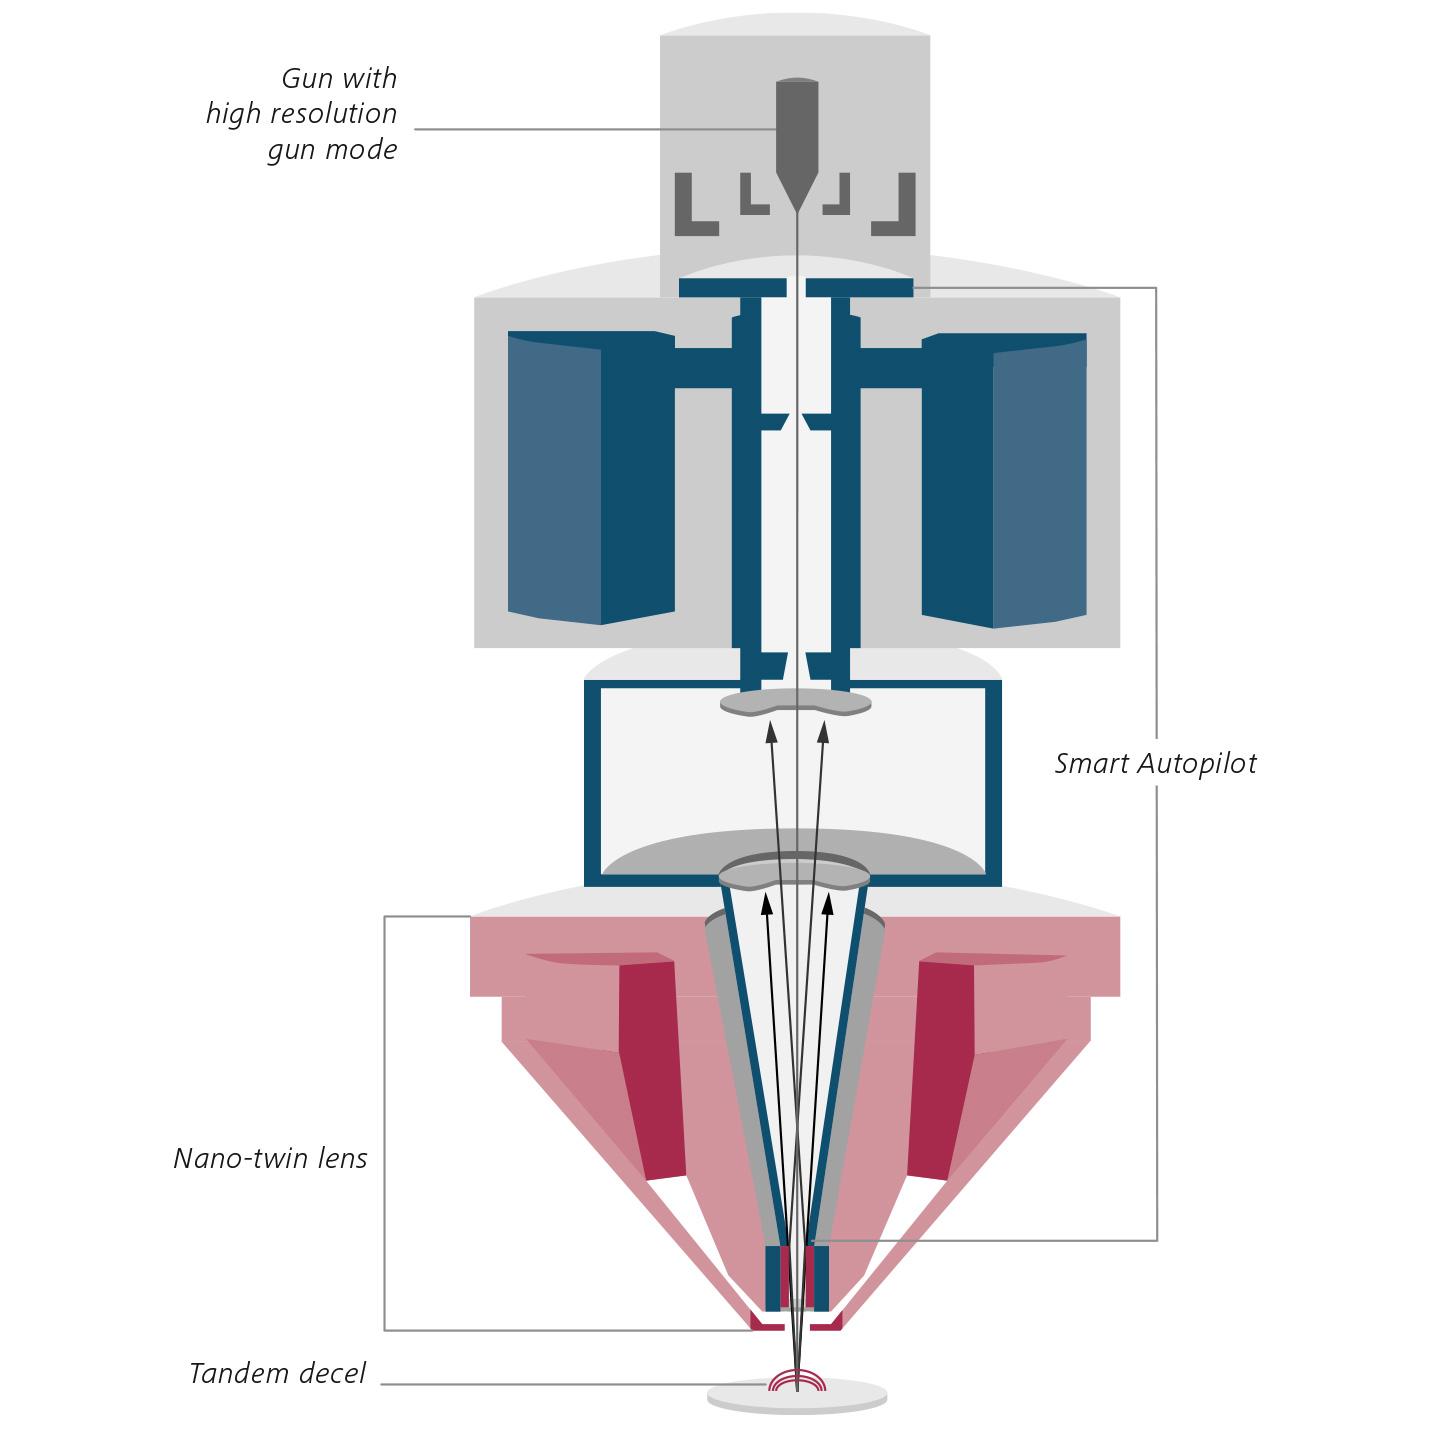 Gemini 3カラムの新しい光学設計。GeminiSEM 560の断面模式図。ナノツインレンズ（赤）、Smart Autopilot（青）。